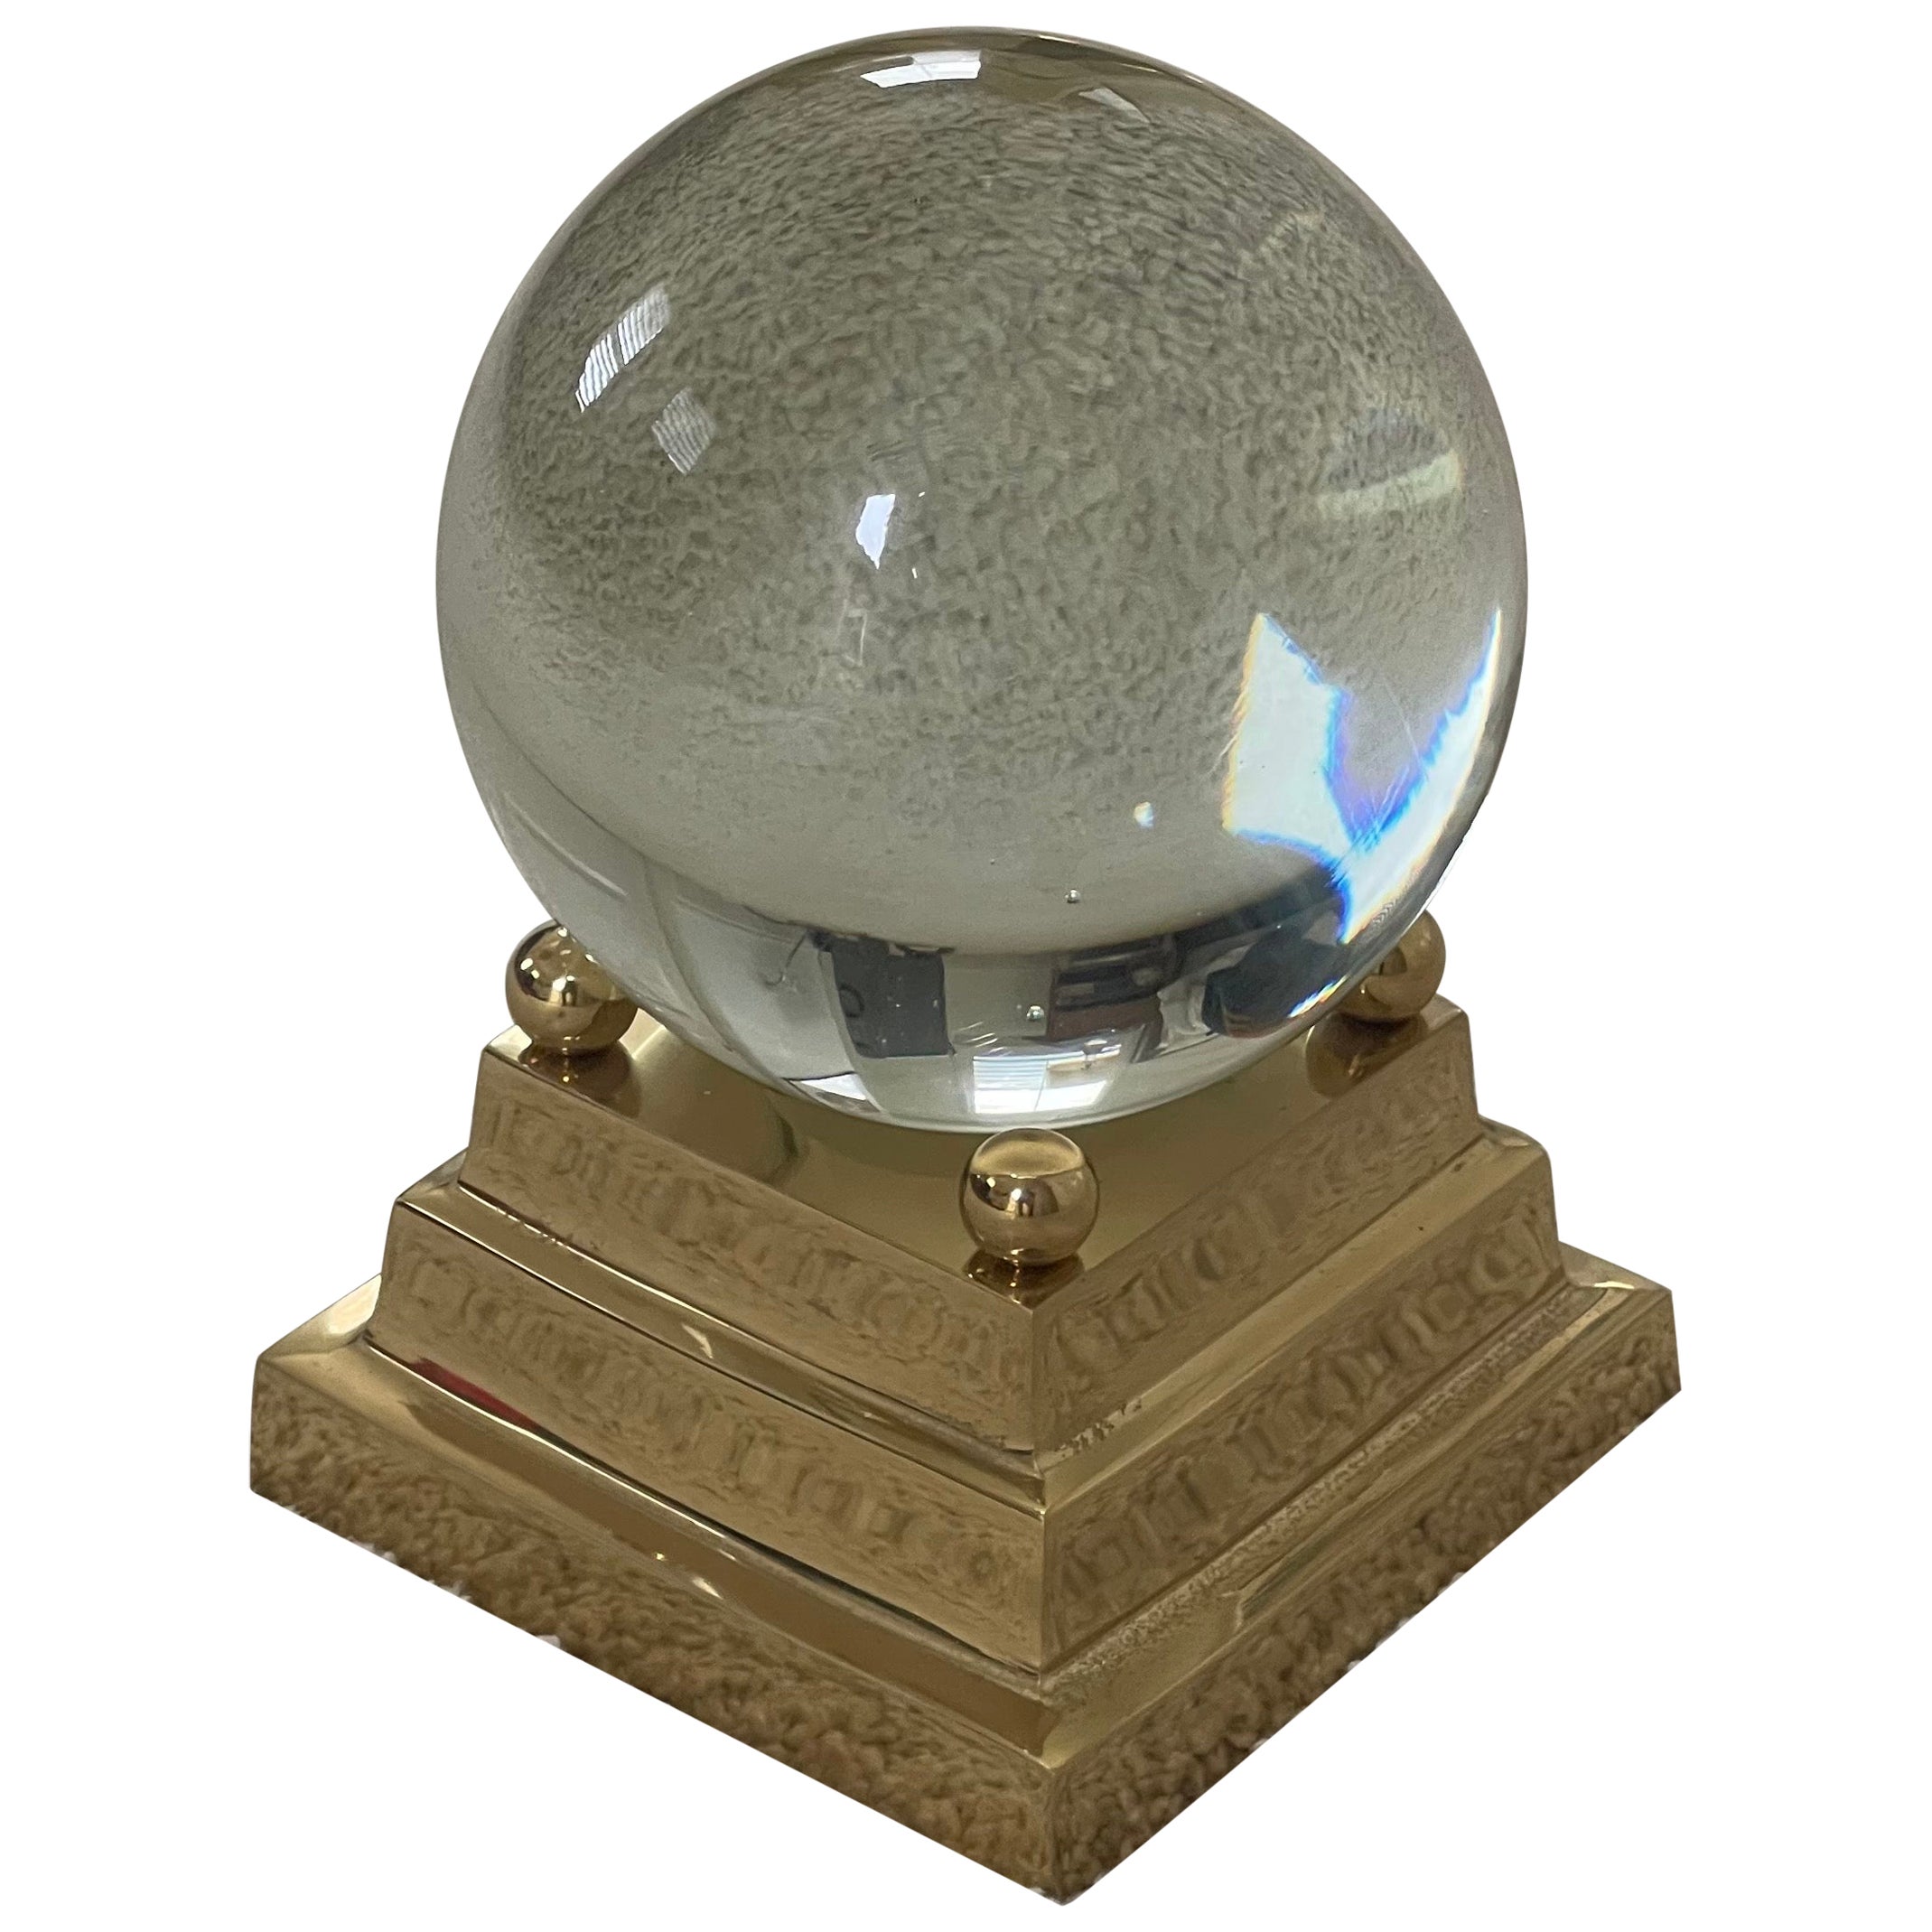  Decorative Crystal Sphere on Brass Base